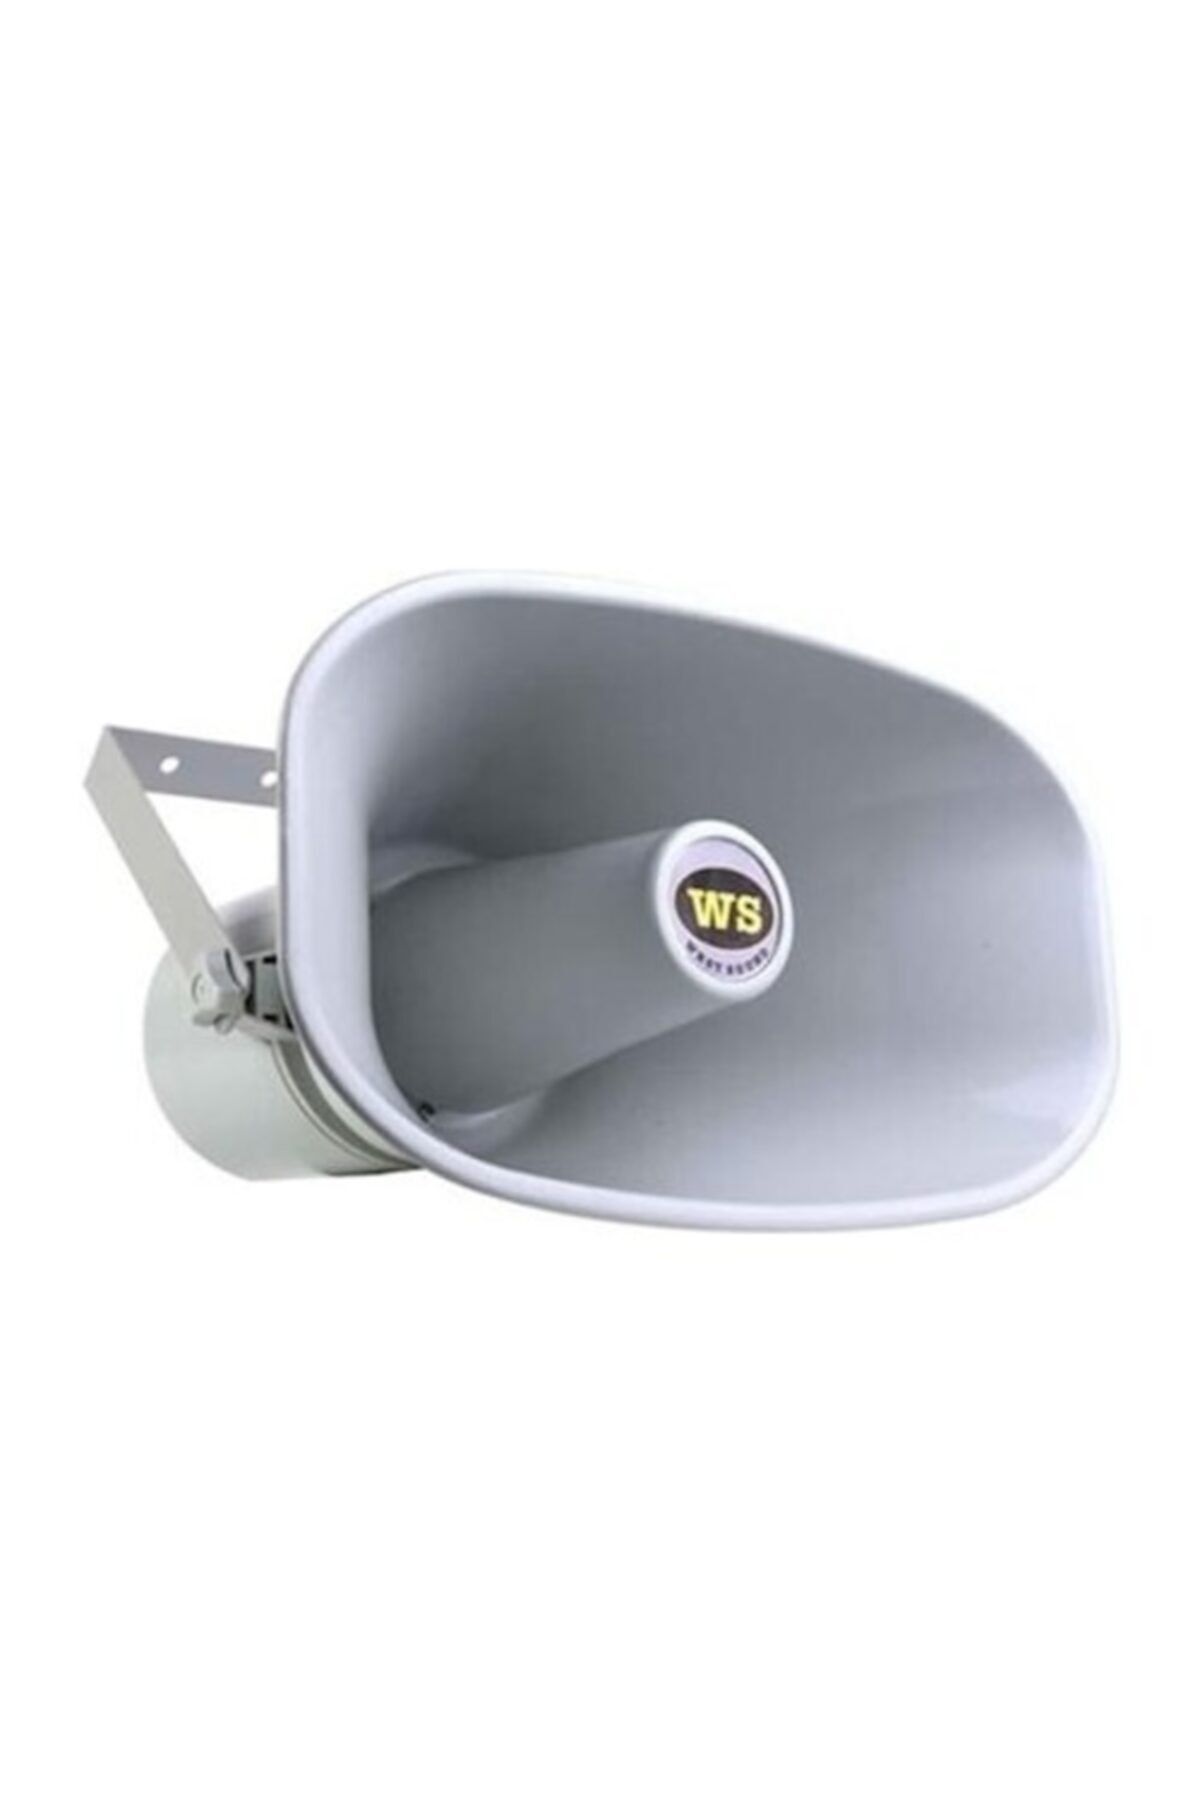 WESTSOUND Pho-64 100w Plastik Havalı Oval Horn Hoparlör